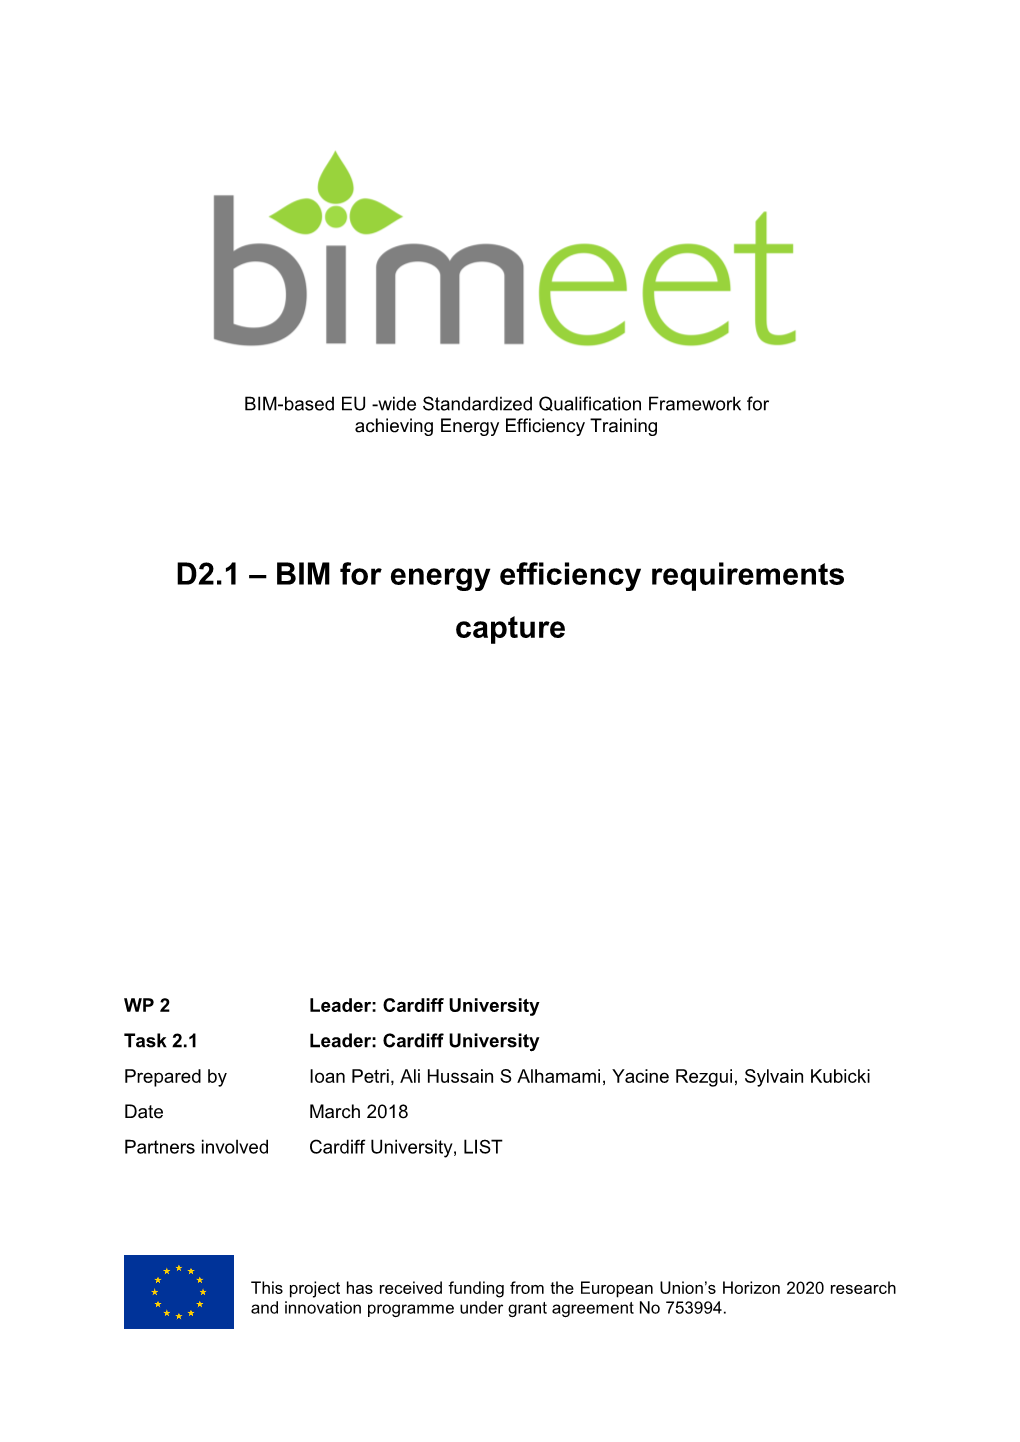 D2.1 – BIM for Energy Efficiency Requirements Capture